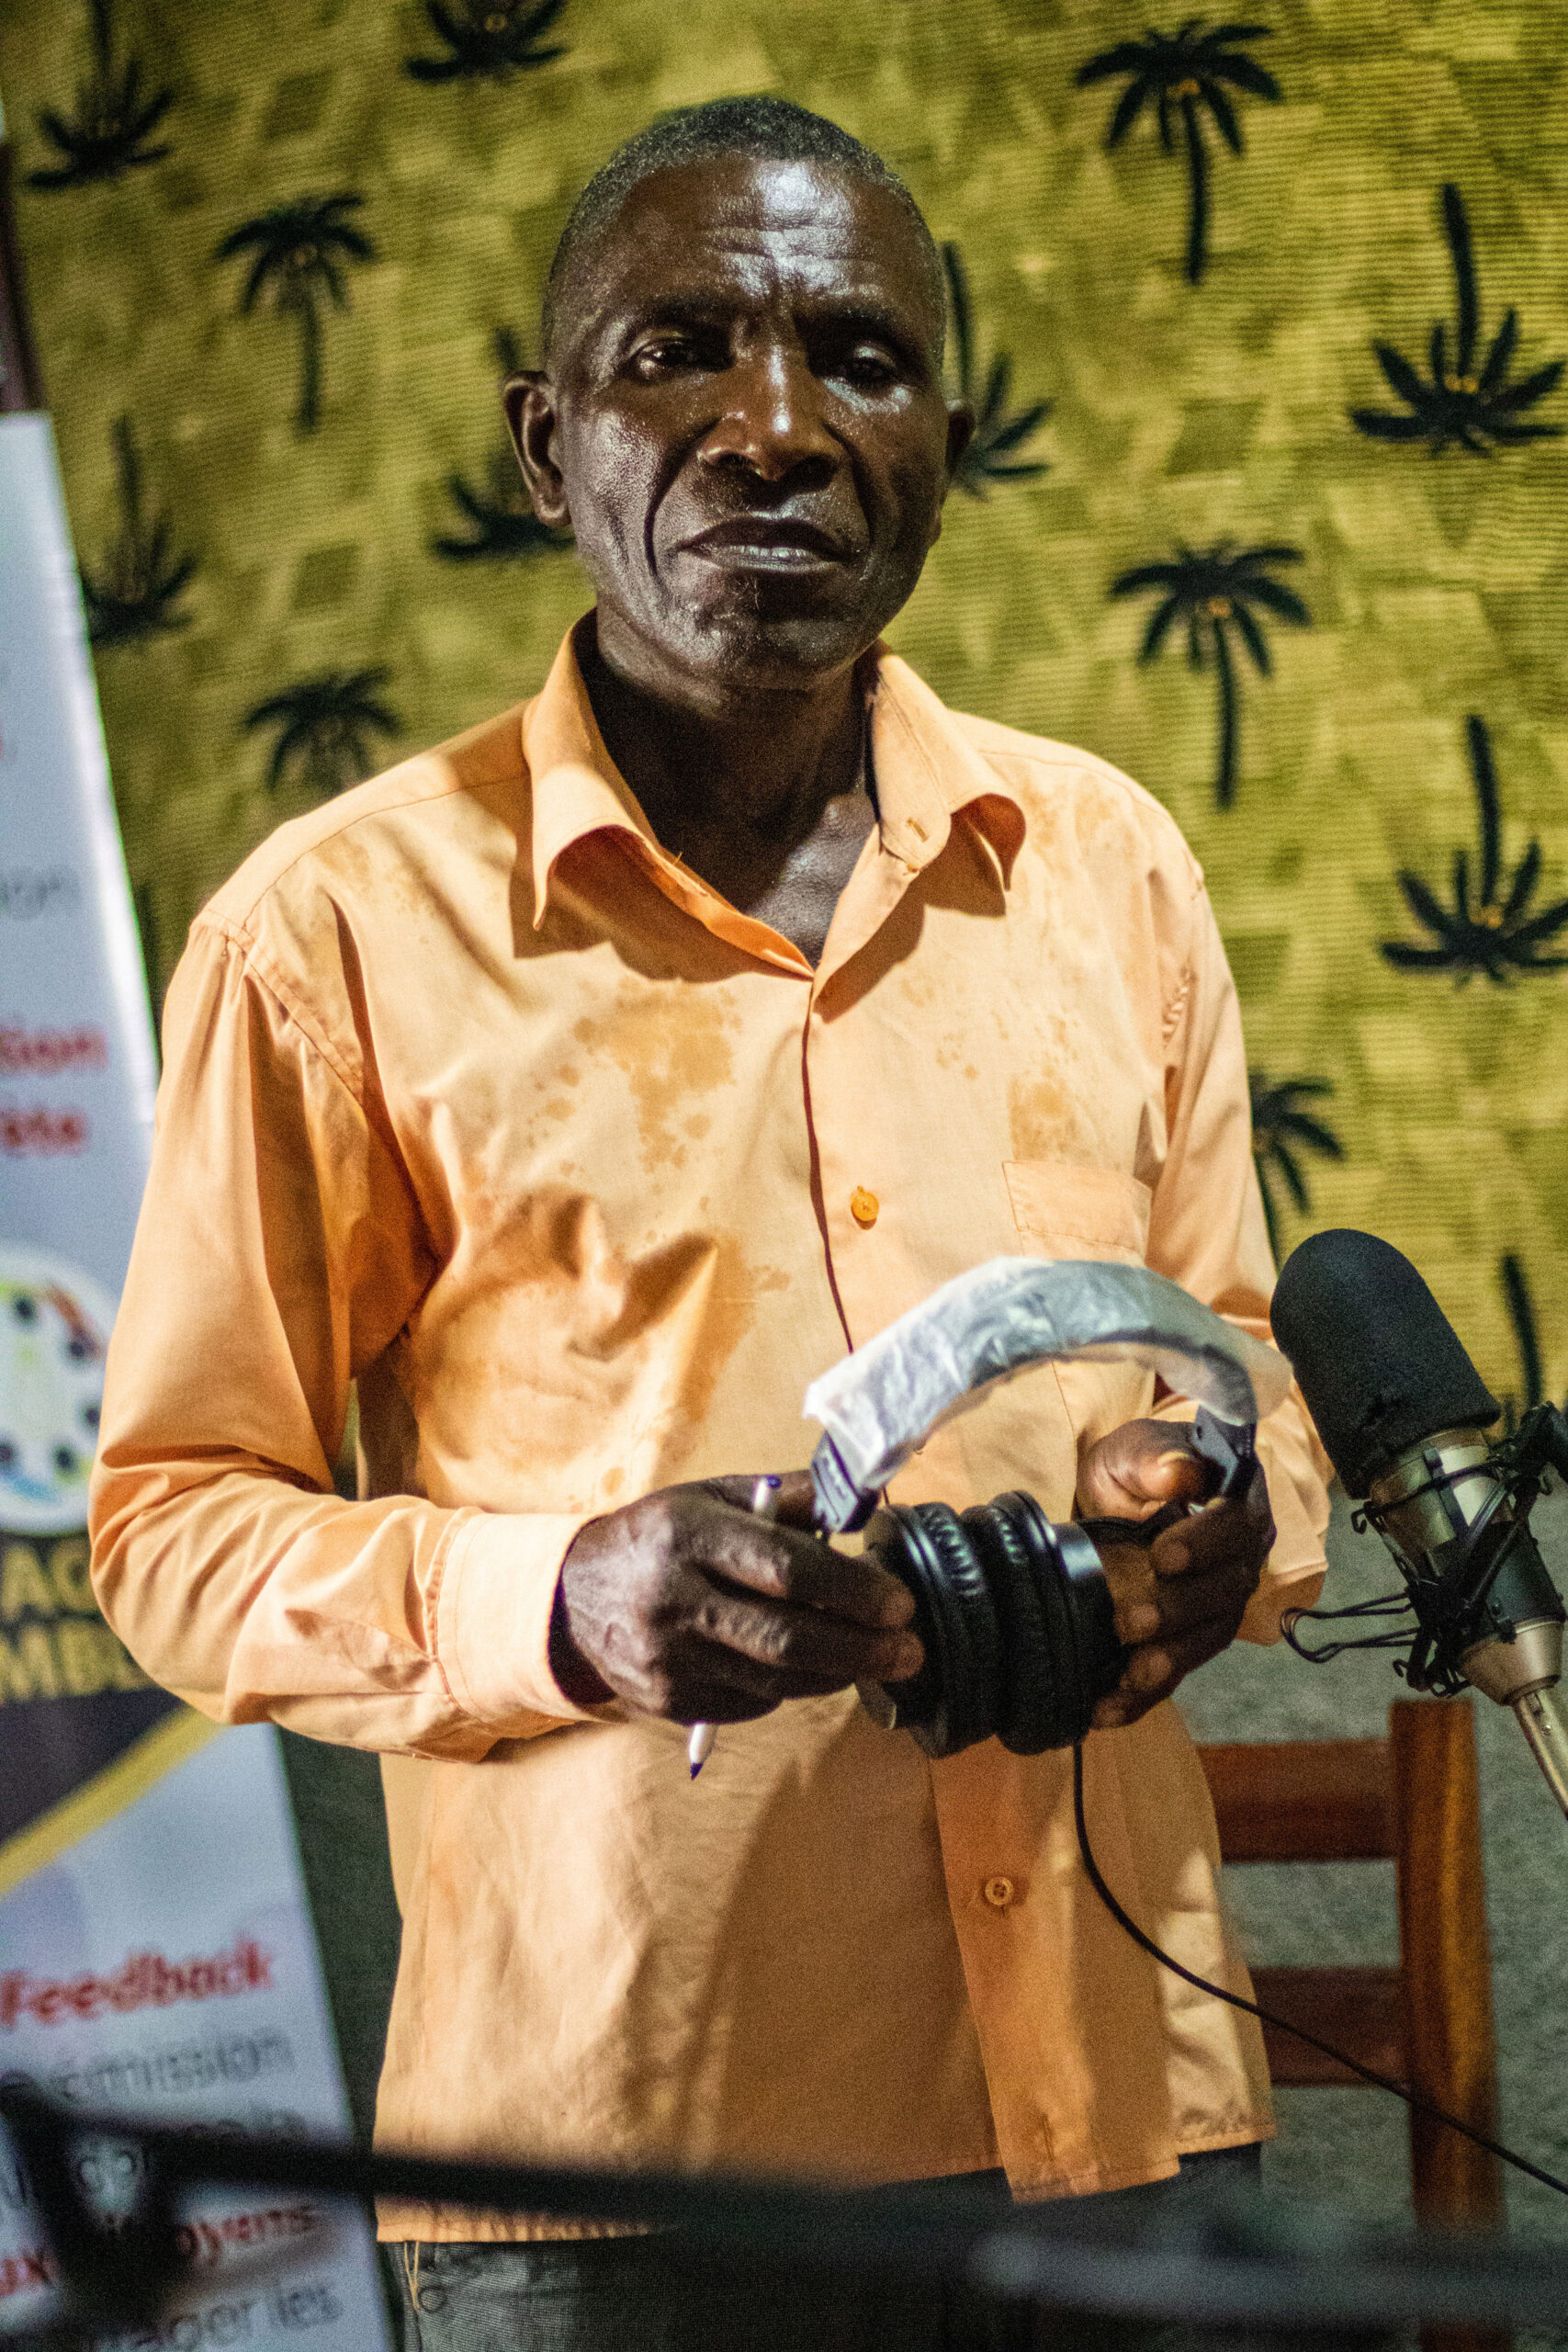 A presenter for Radio Munku puts headphones away after a programme, in the Mbakana region in Democratic Republic of Congo. © Justin Makangara / Fondation Hirondelle.